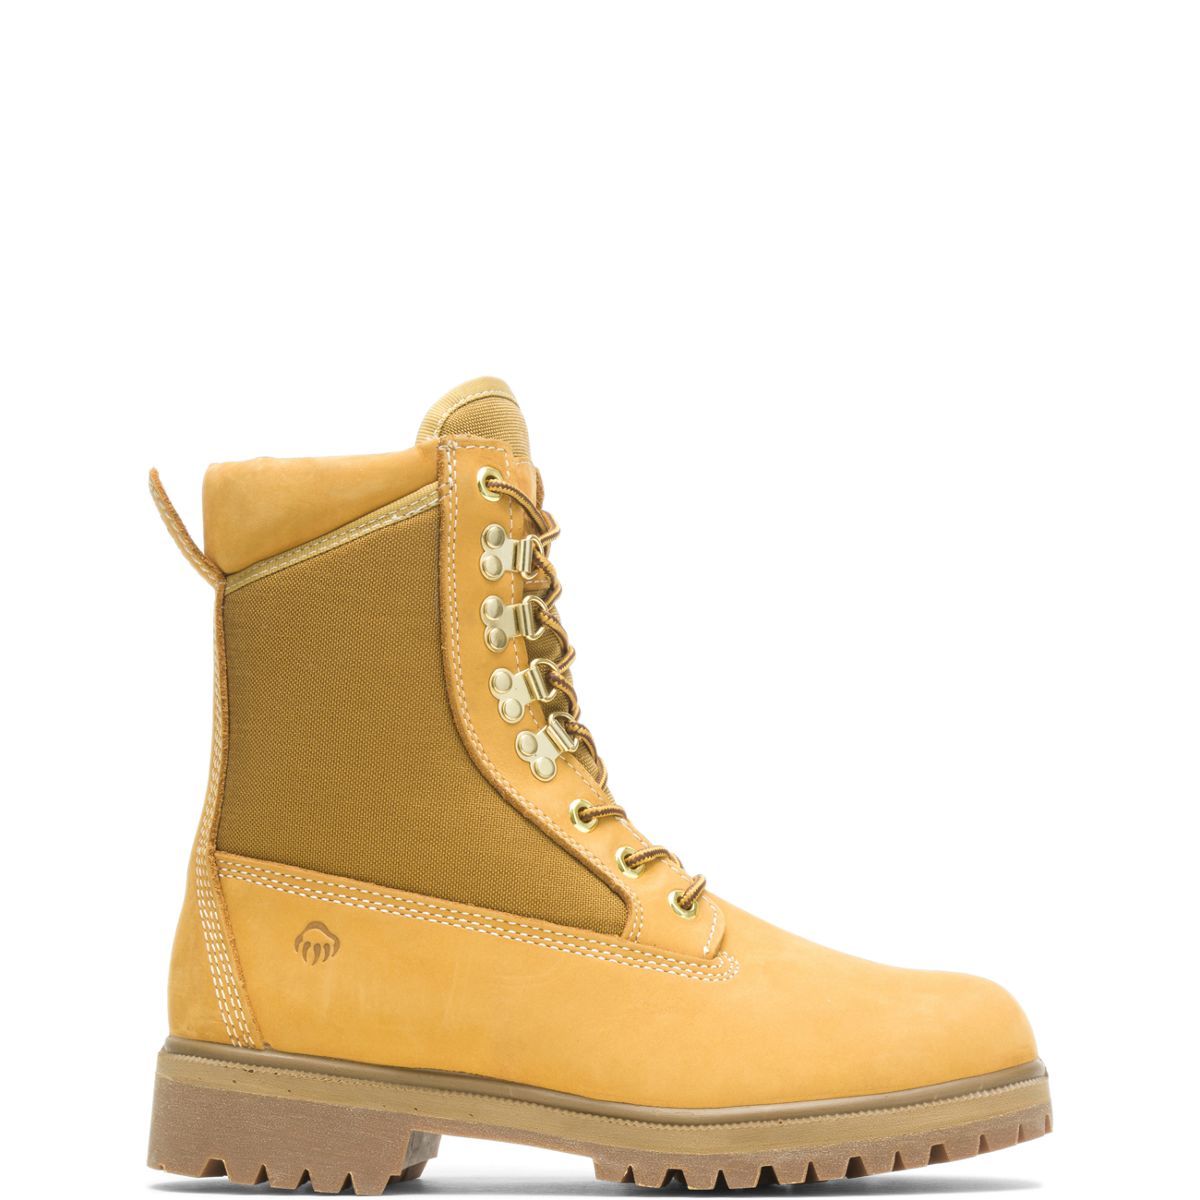 lightweight insulated waterproof boots